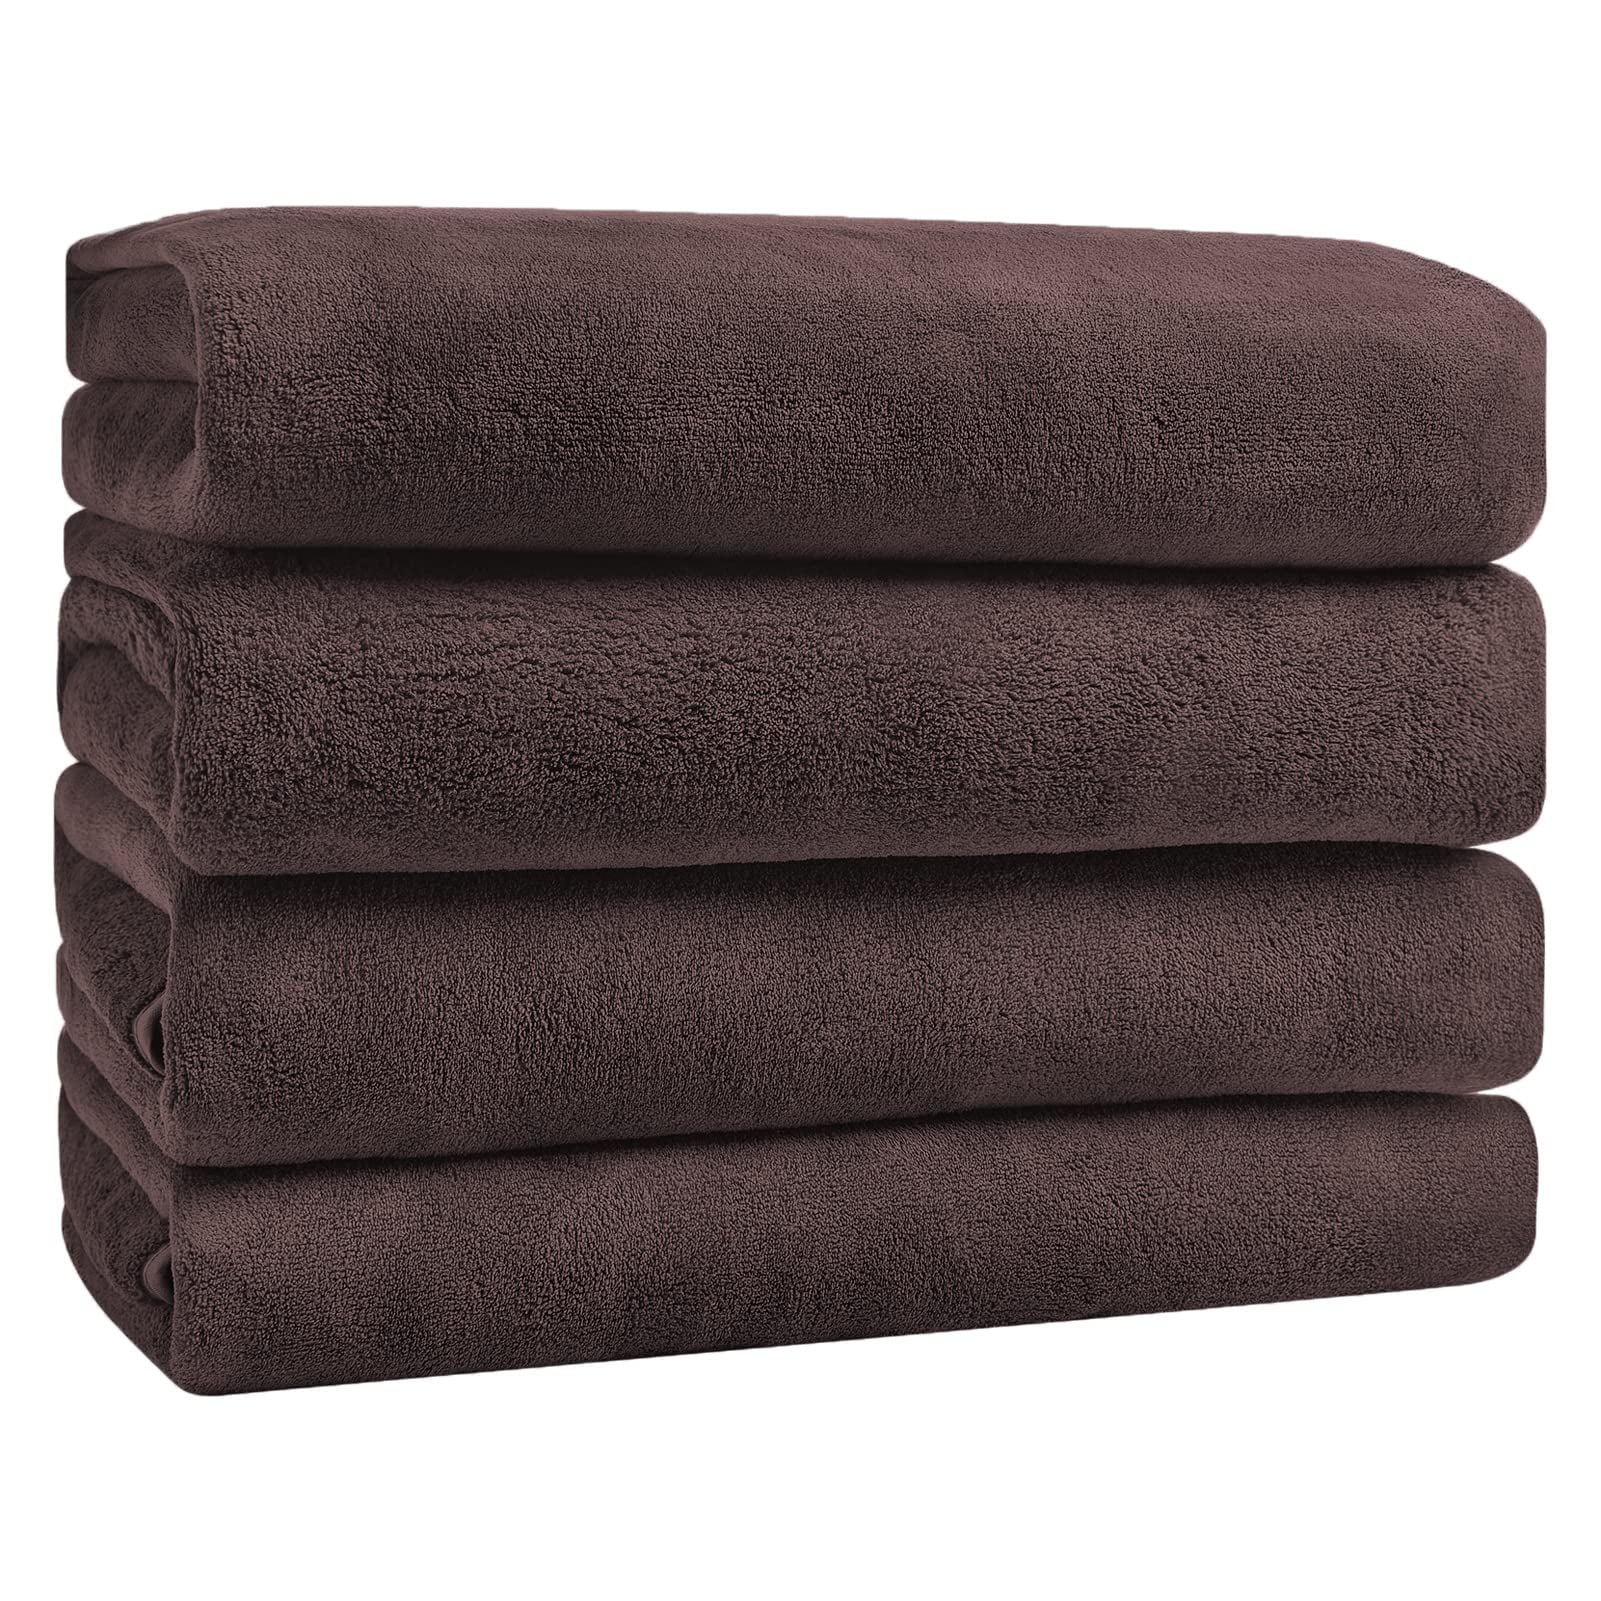 Graceaier Ultra Soft Bath Towel Set - Quick Drying -2 Bath Towels 2 Hand  Towels 2 Washcloths - Microfiber Coral Velvet Highly Absorbent Towel for  Bath Fitness, Bathroom, Sports, Yoga, Travel 